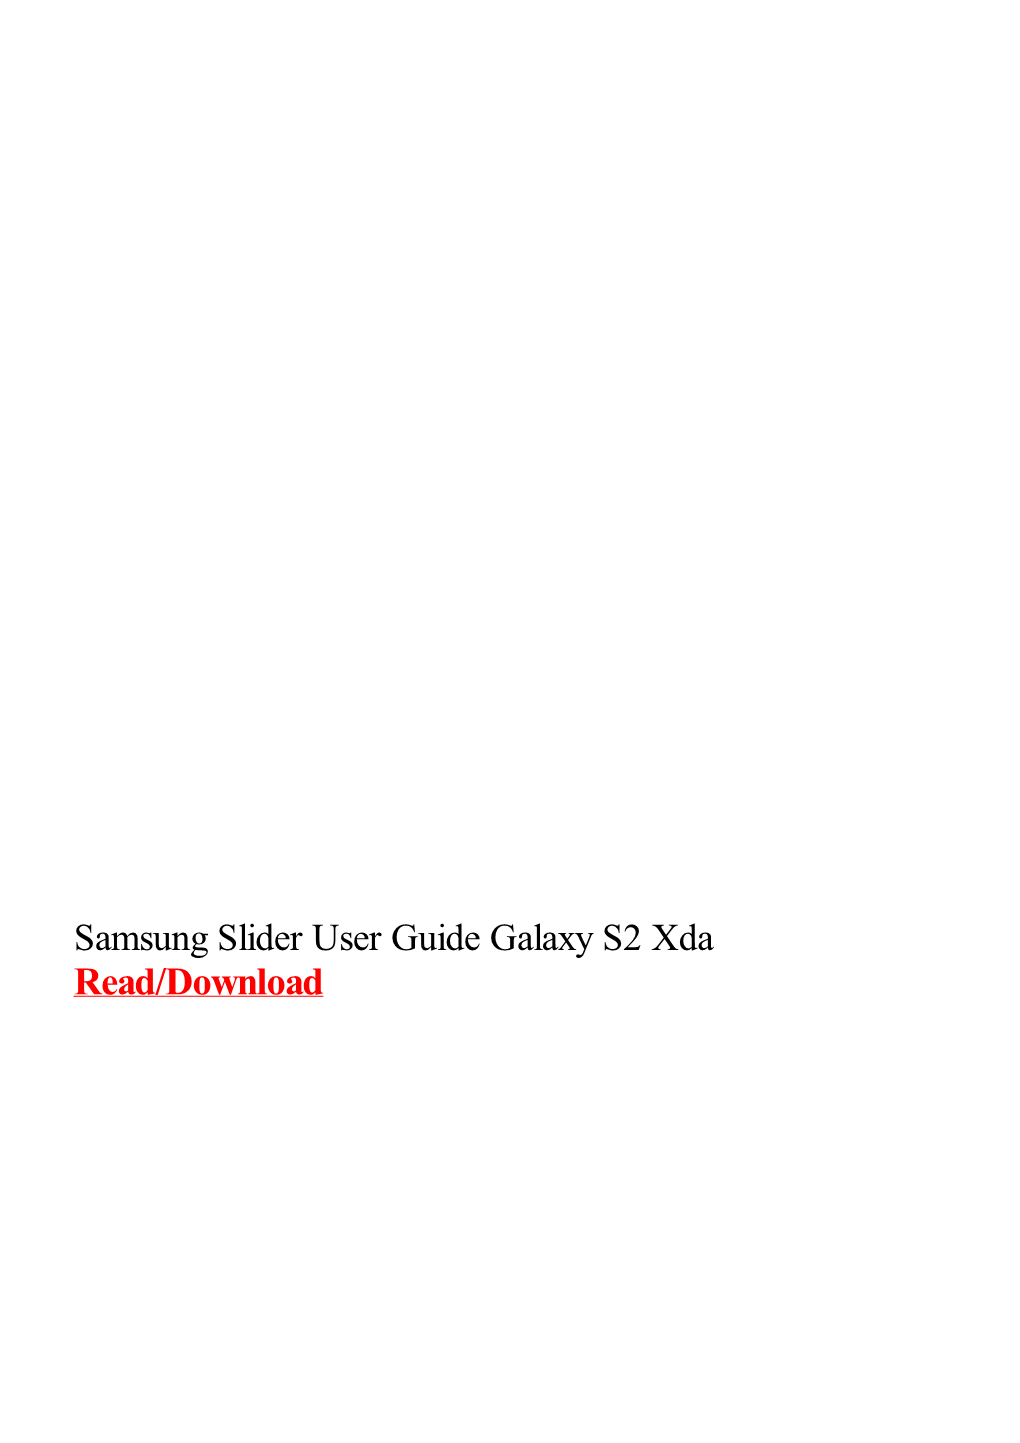 Samsung Slider User Guide Galaxy S2 Xda.Pdf